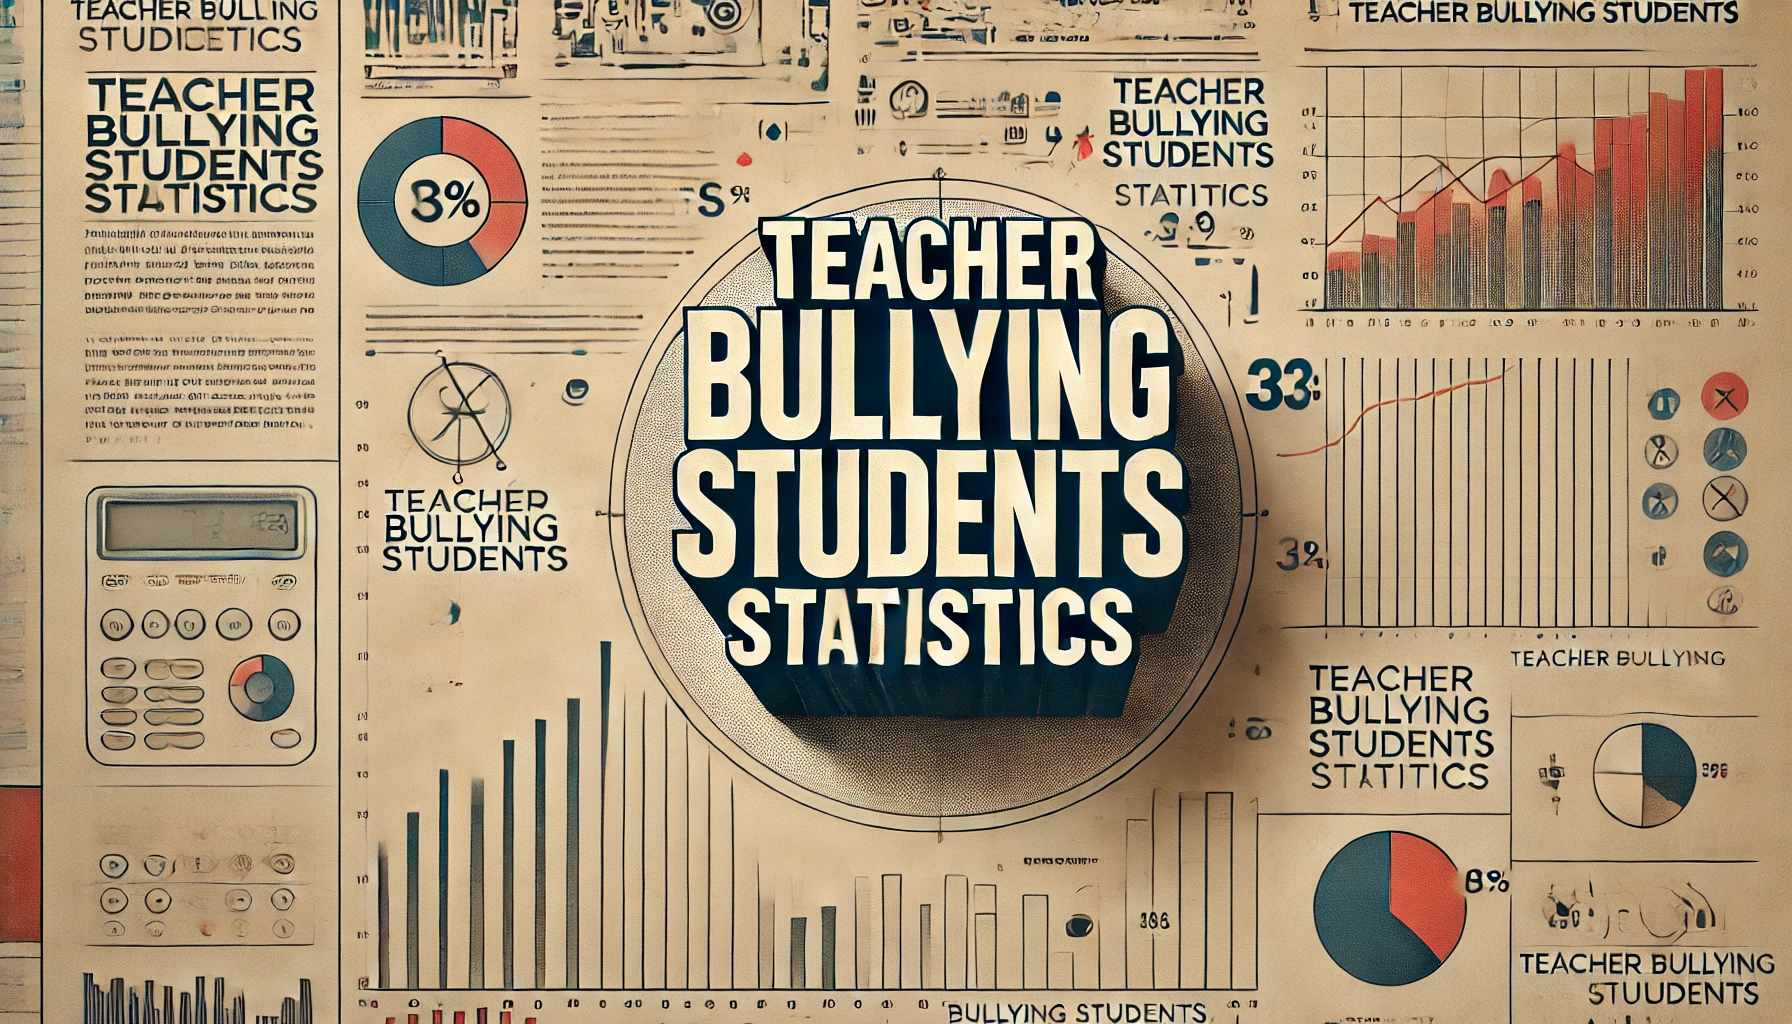 Teacher Bullying Students’ Statistics ad Facts